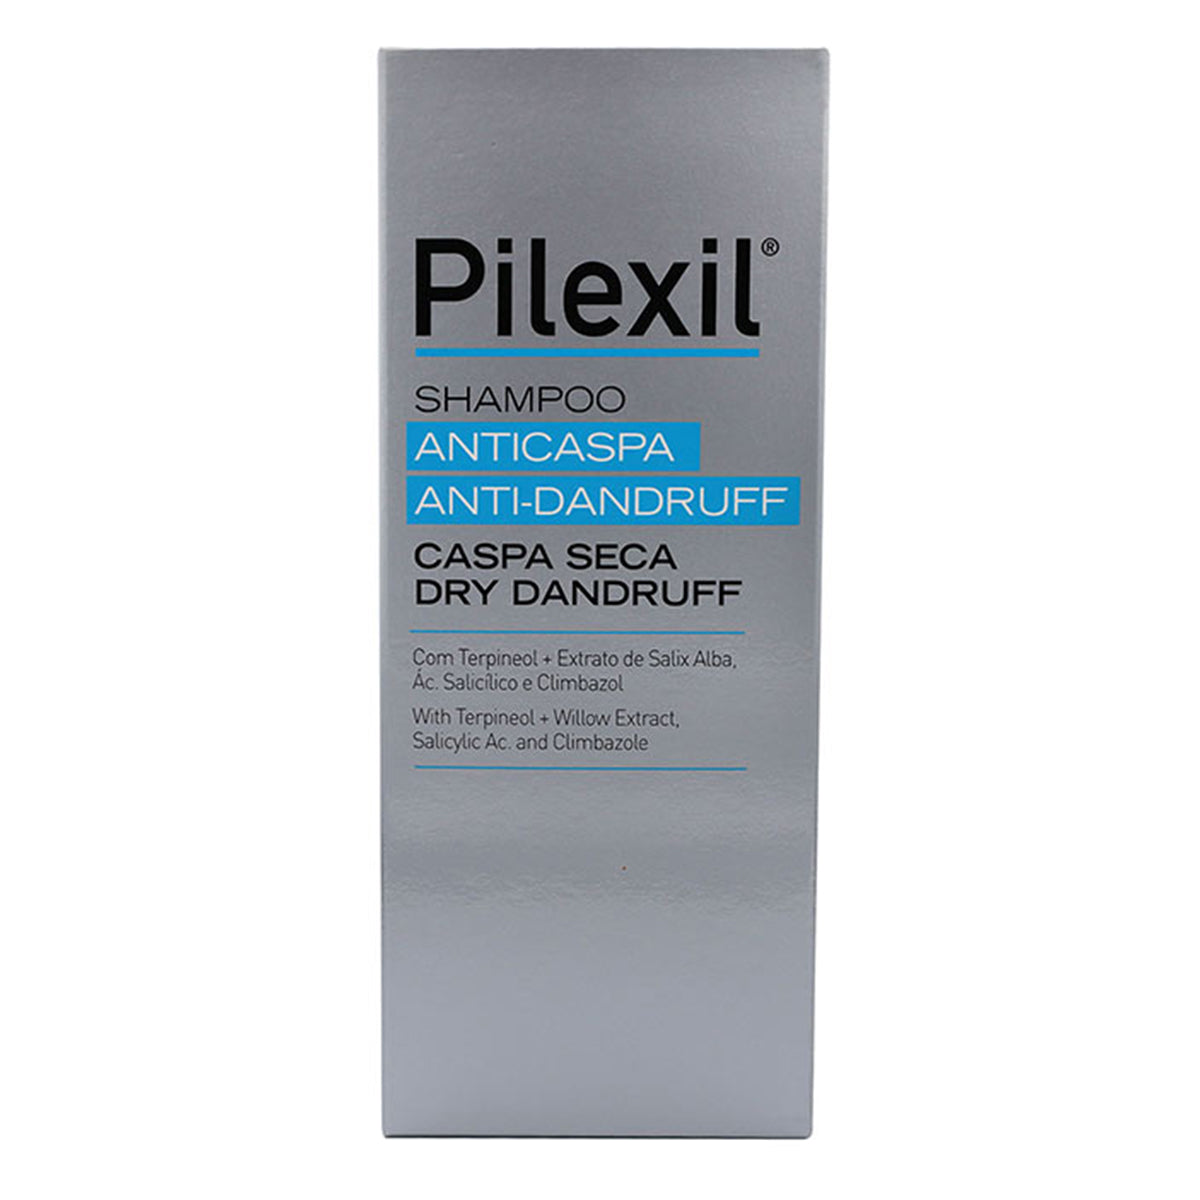 ARMSTRONG PILEXIL SHAMPOO ANTICASPA CASPA SECA 300 ML